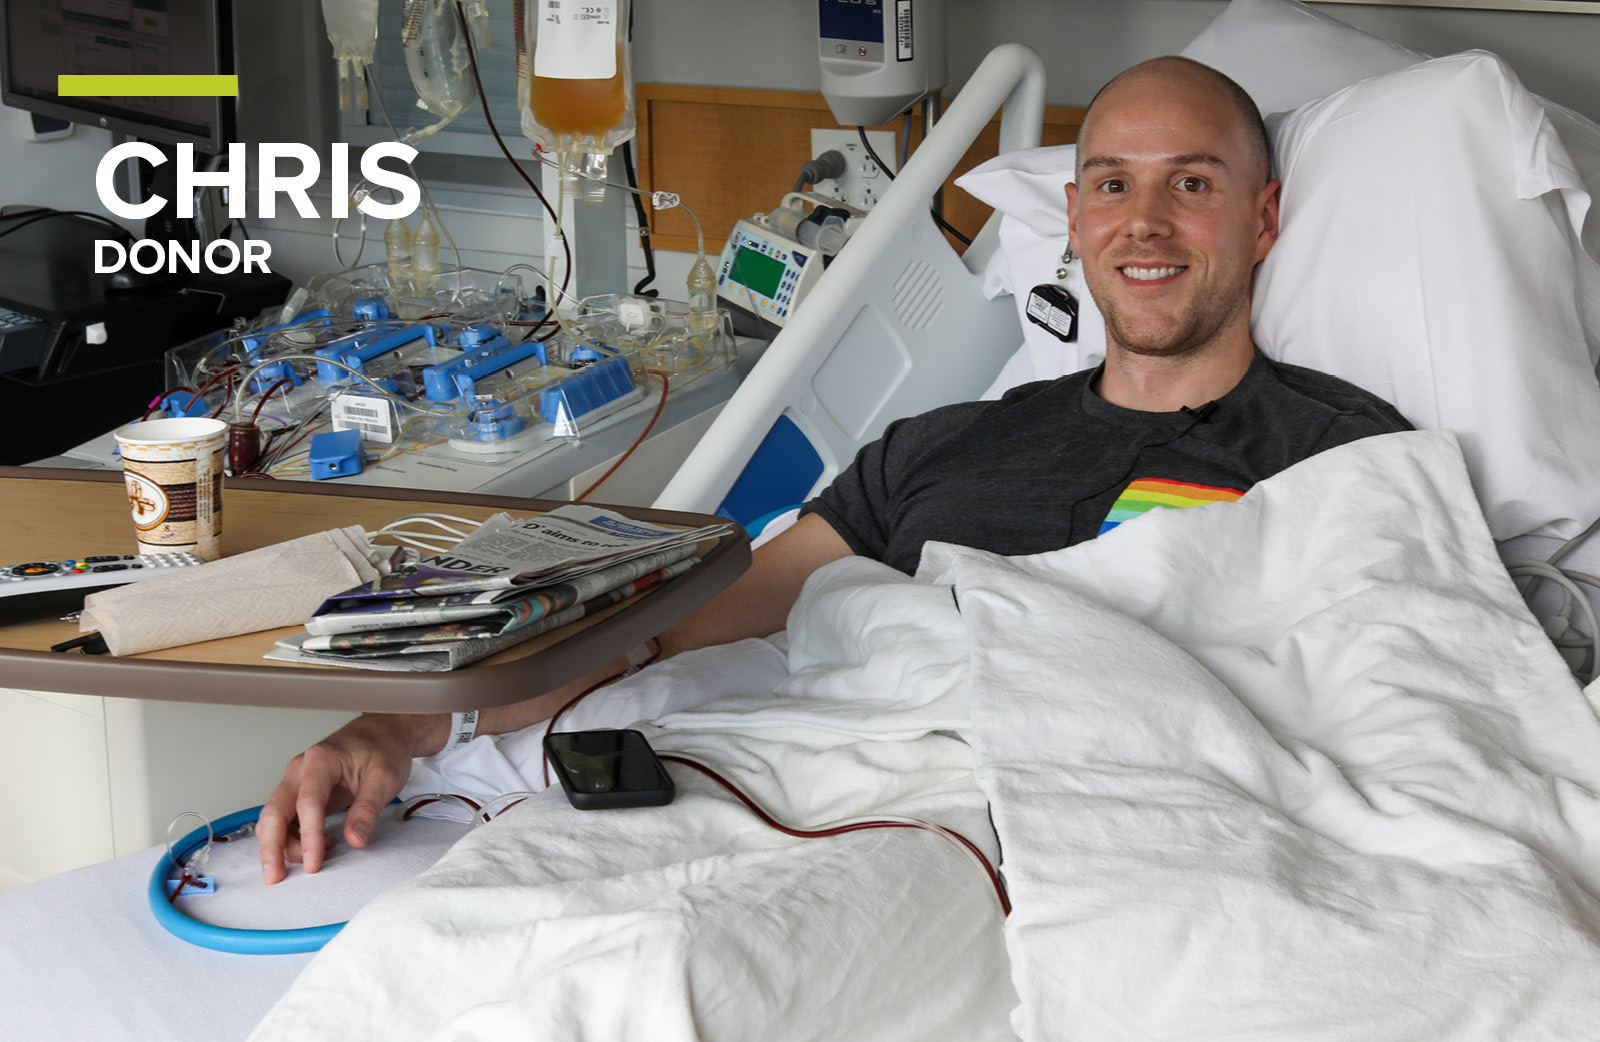 Chris, donor